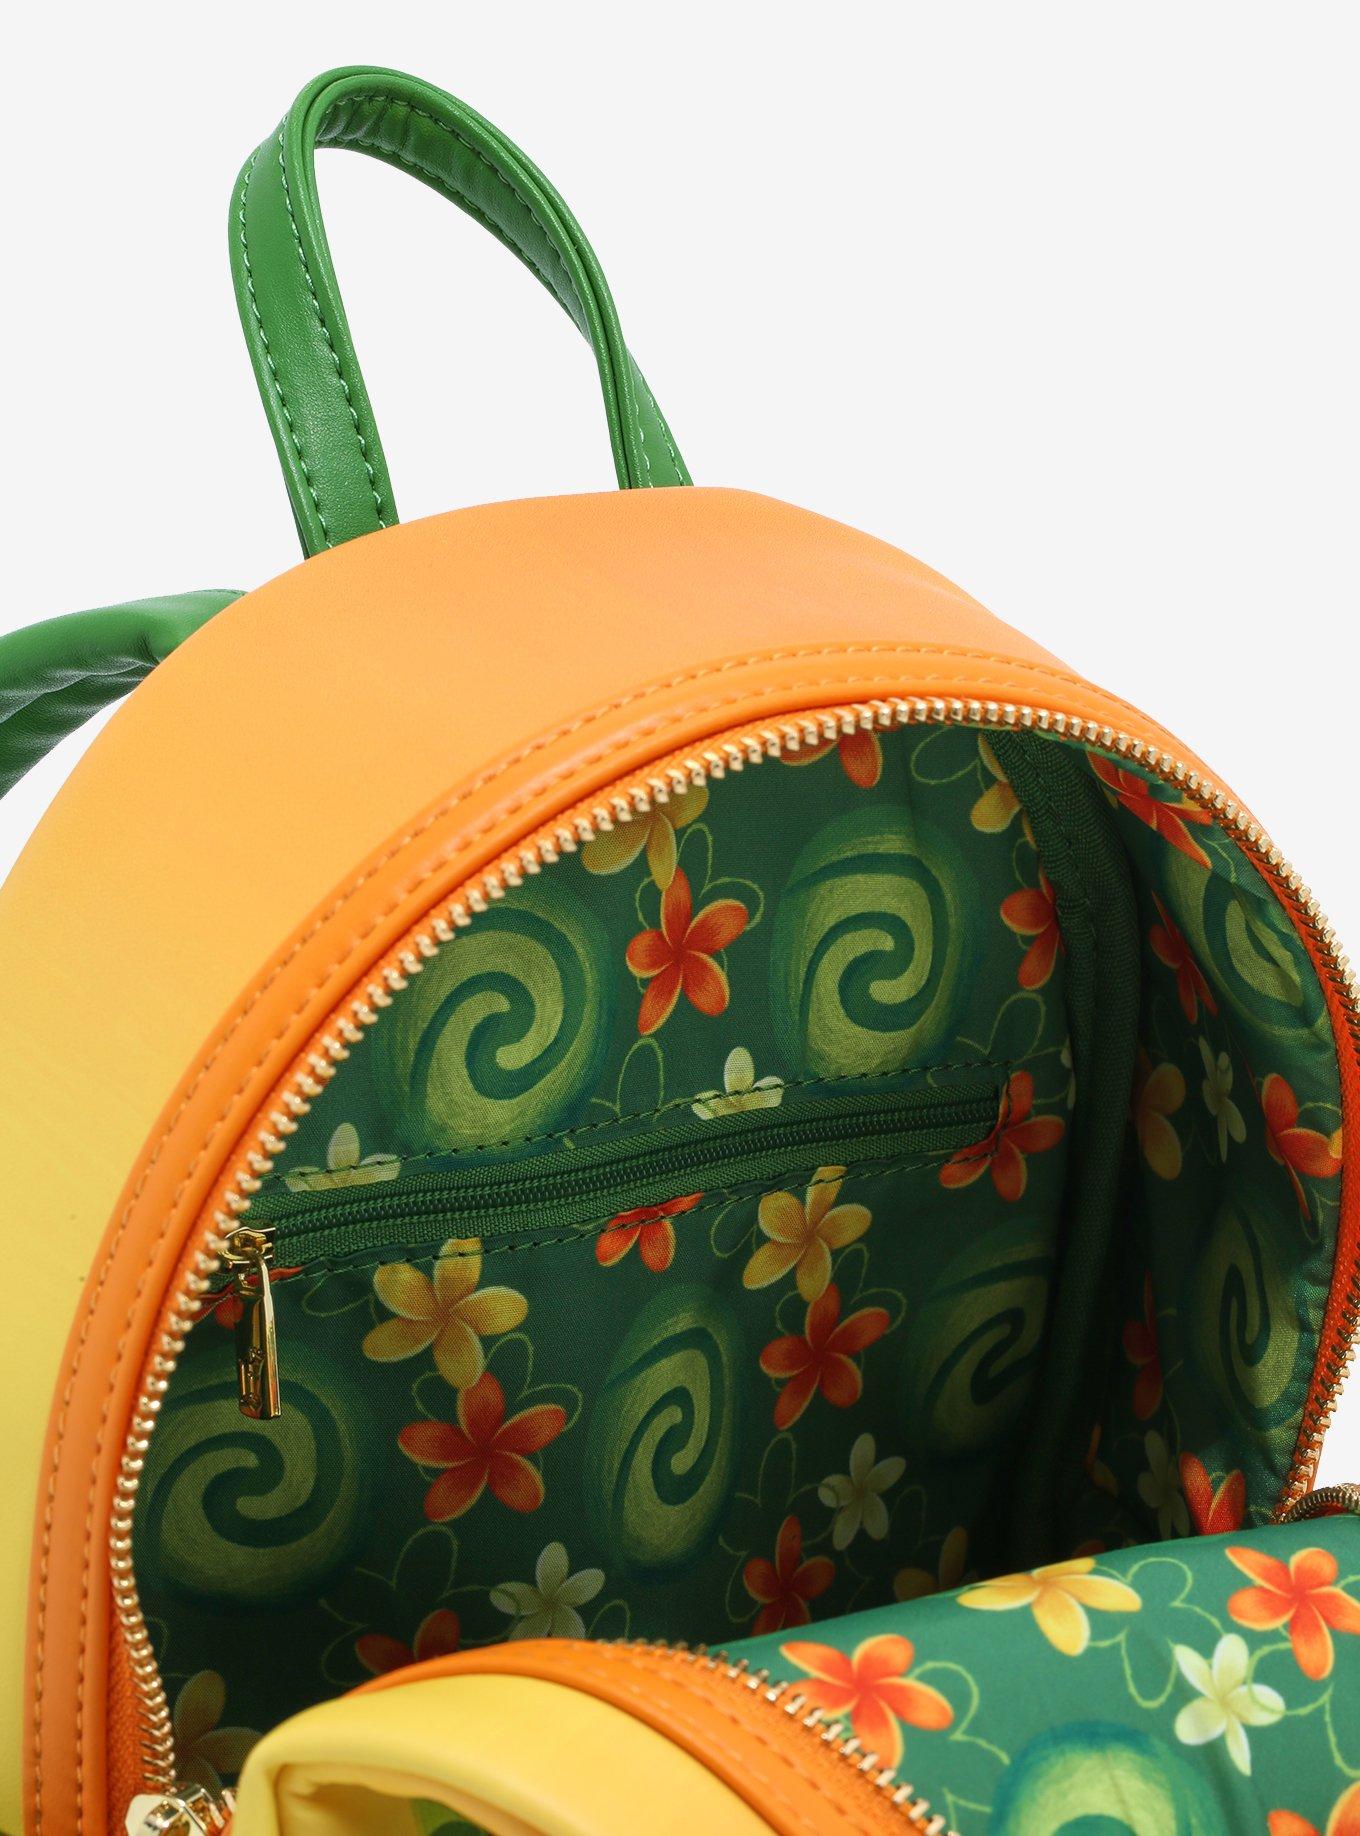 Loungefly Te Fiti Mini Backpack Disney Princess Moana Cosplay Bag